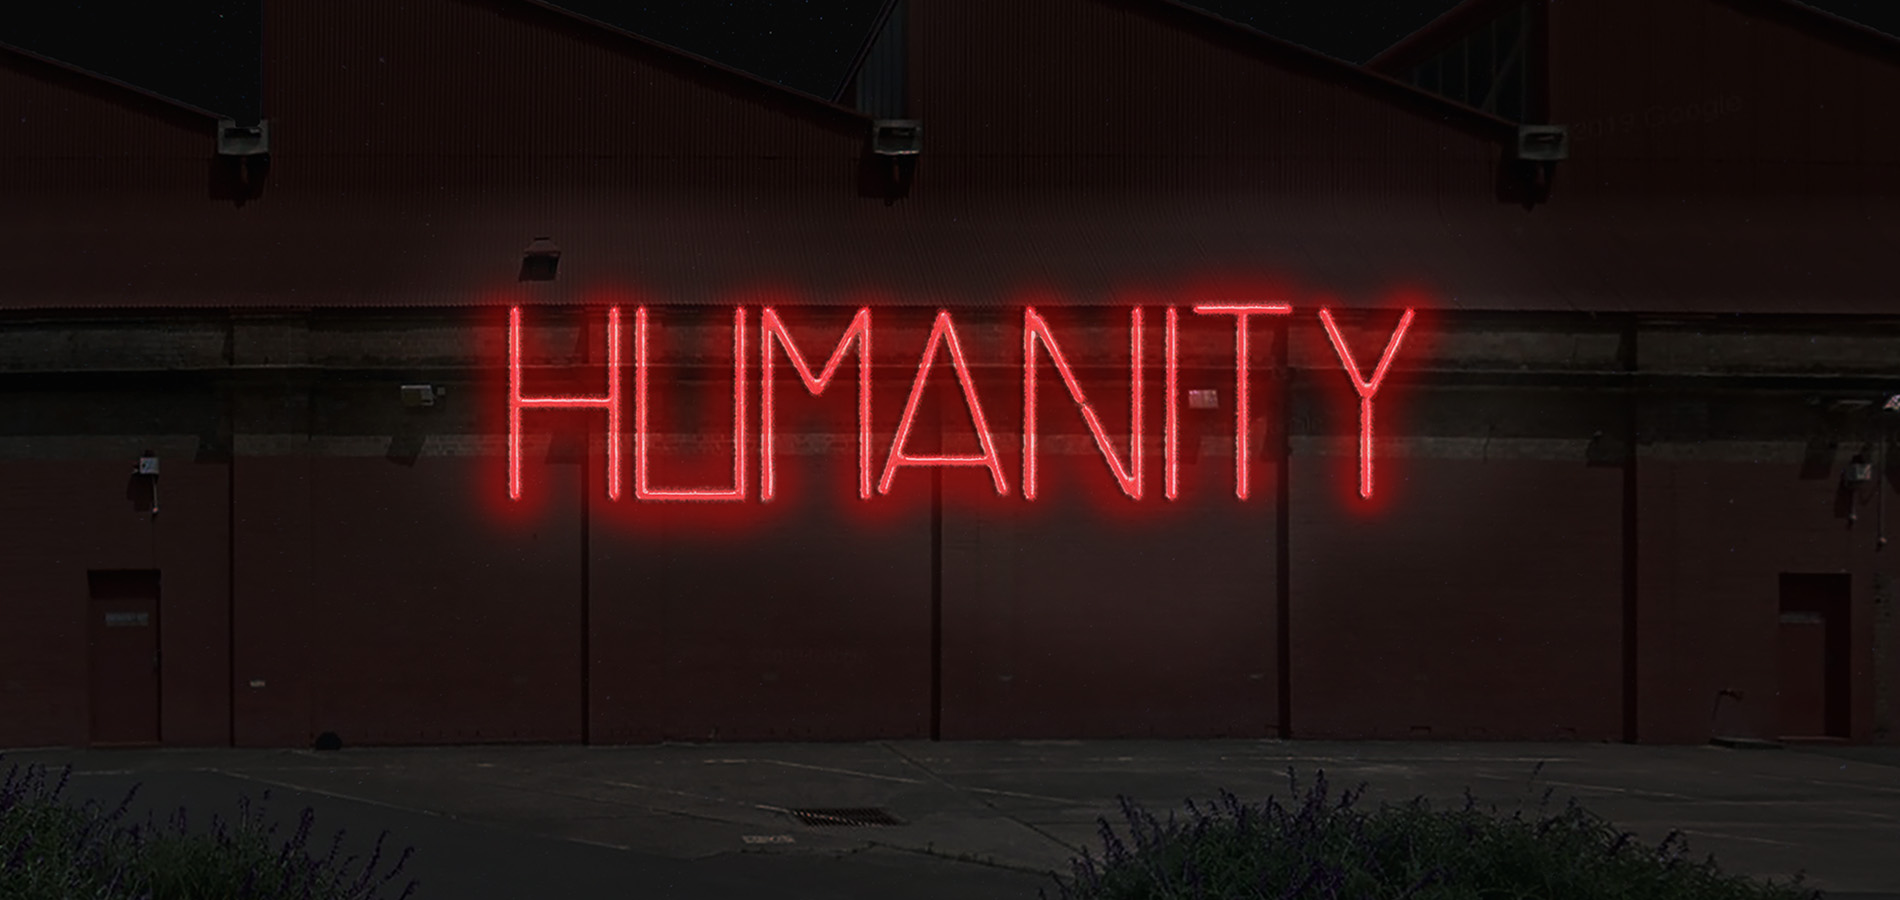 Humanity/Humility